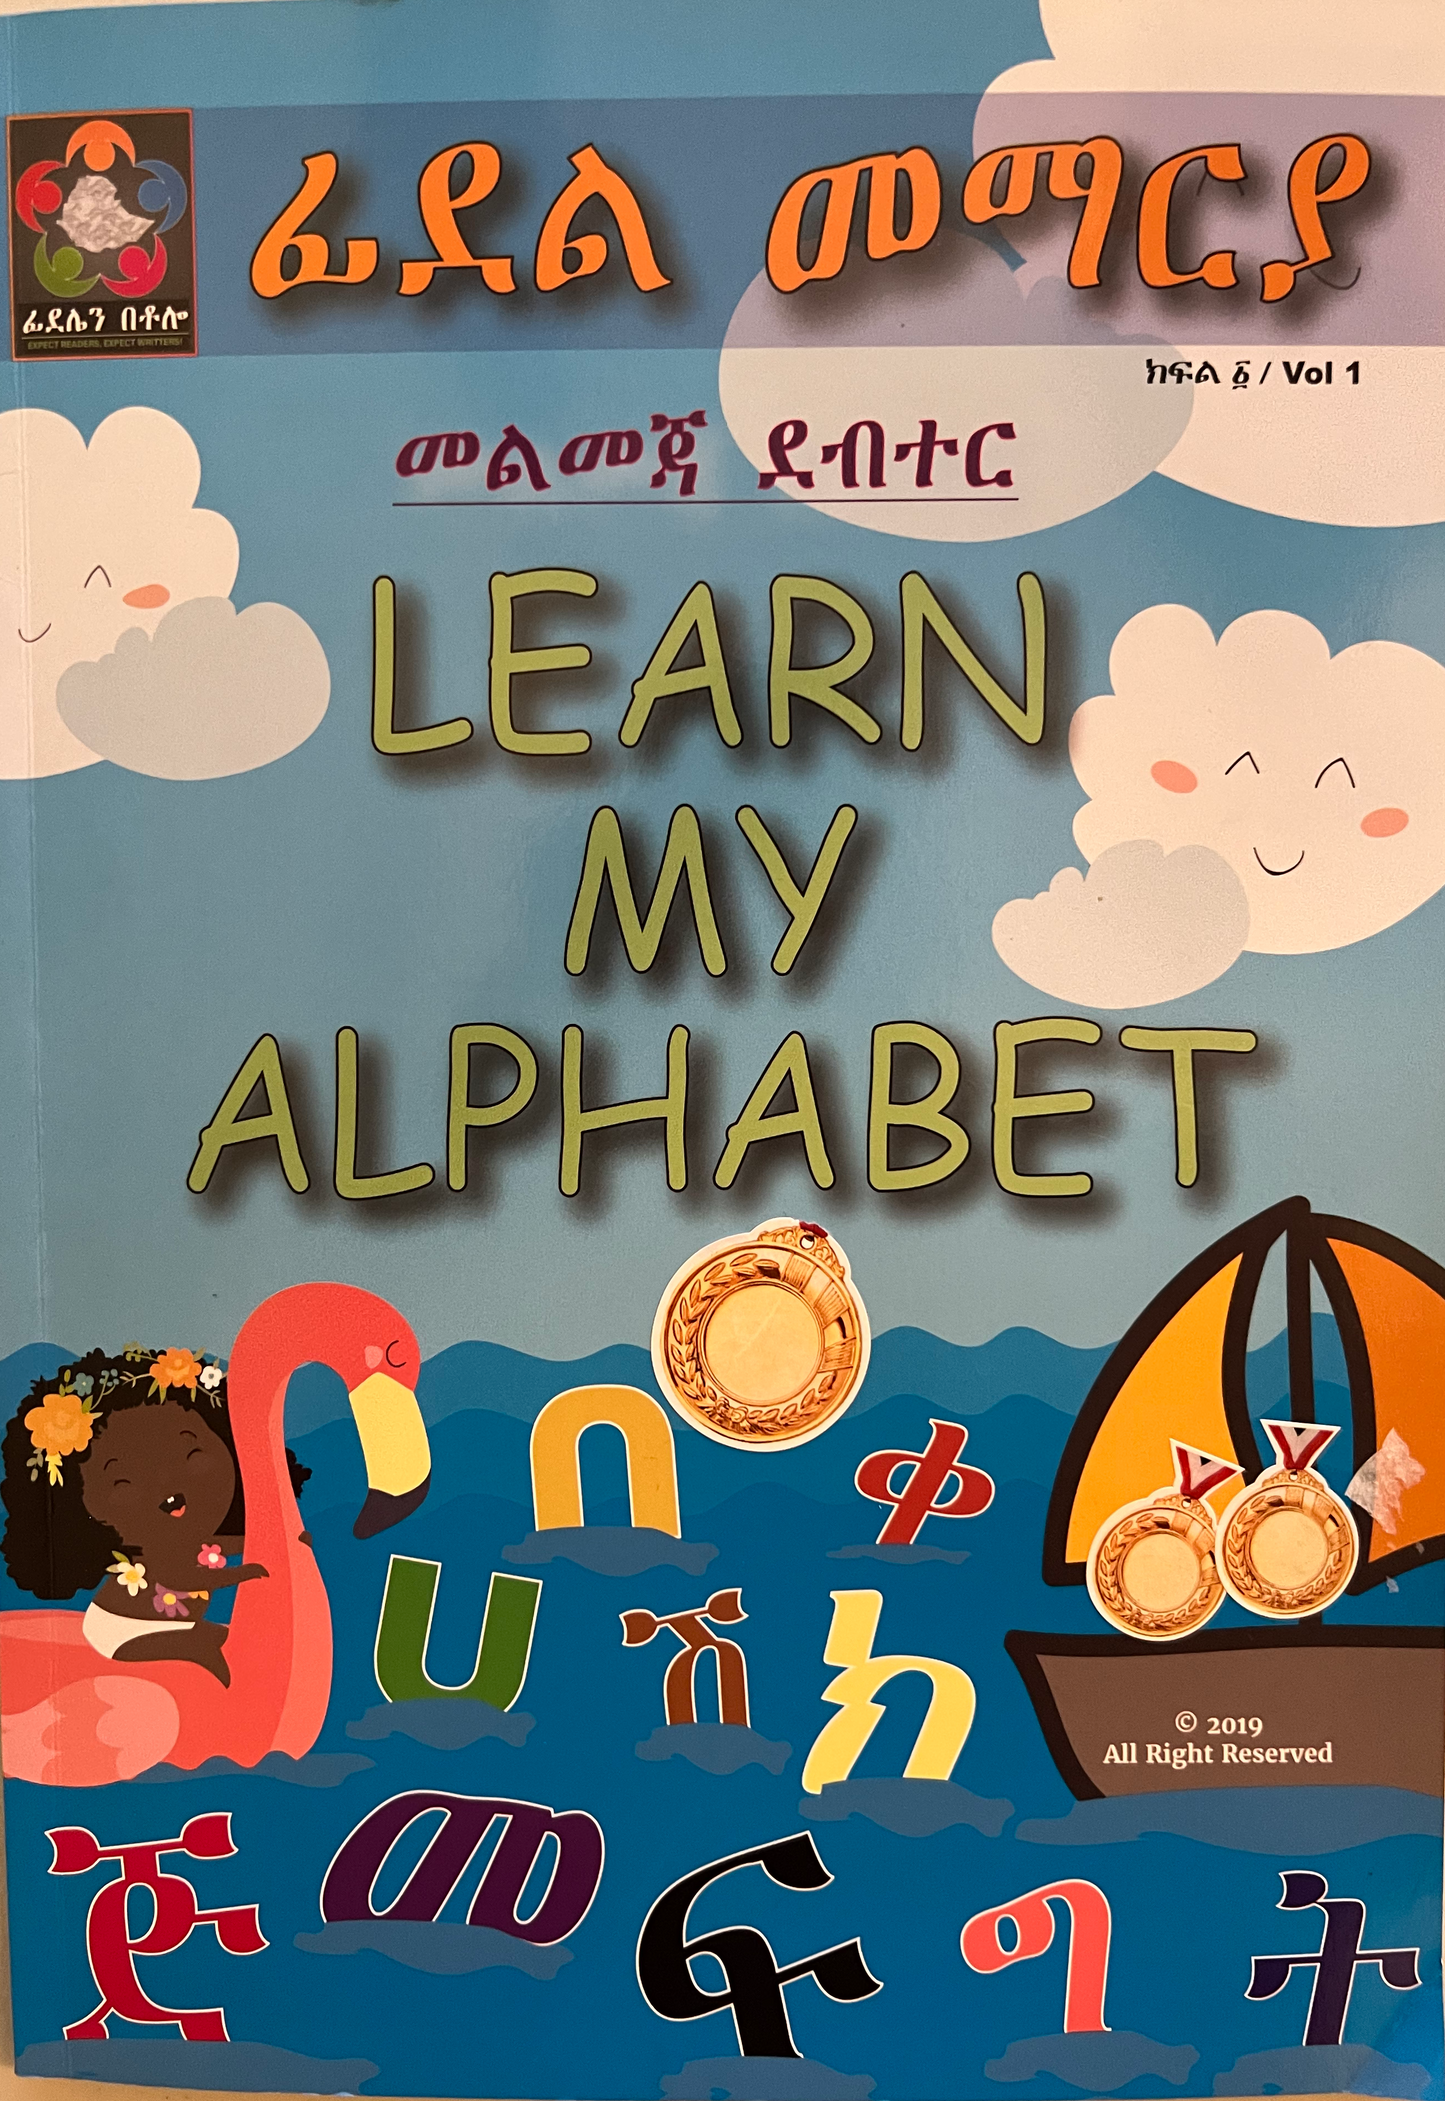 Amharic language textbook and storybook 14